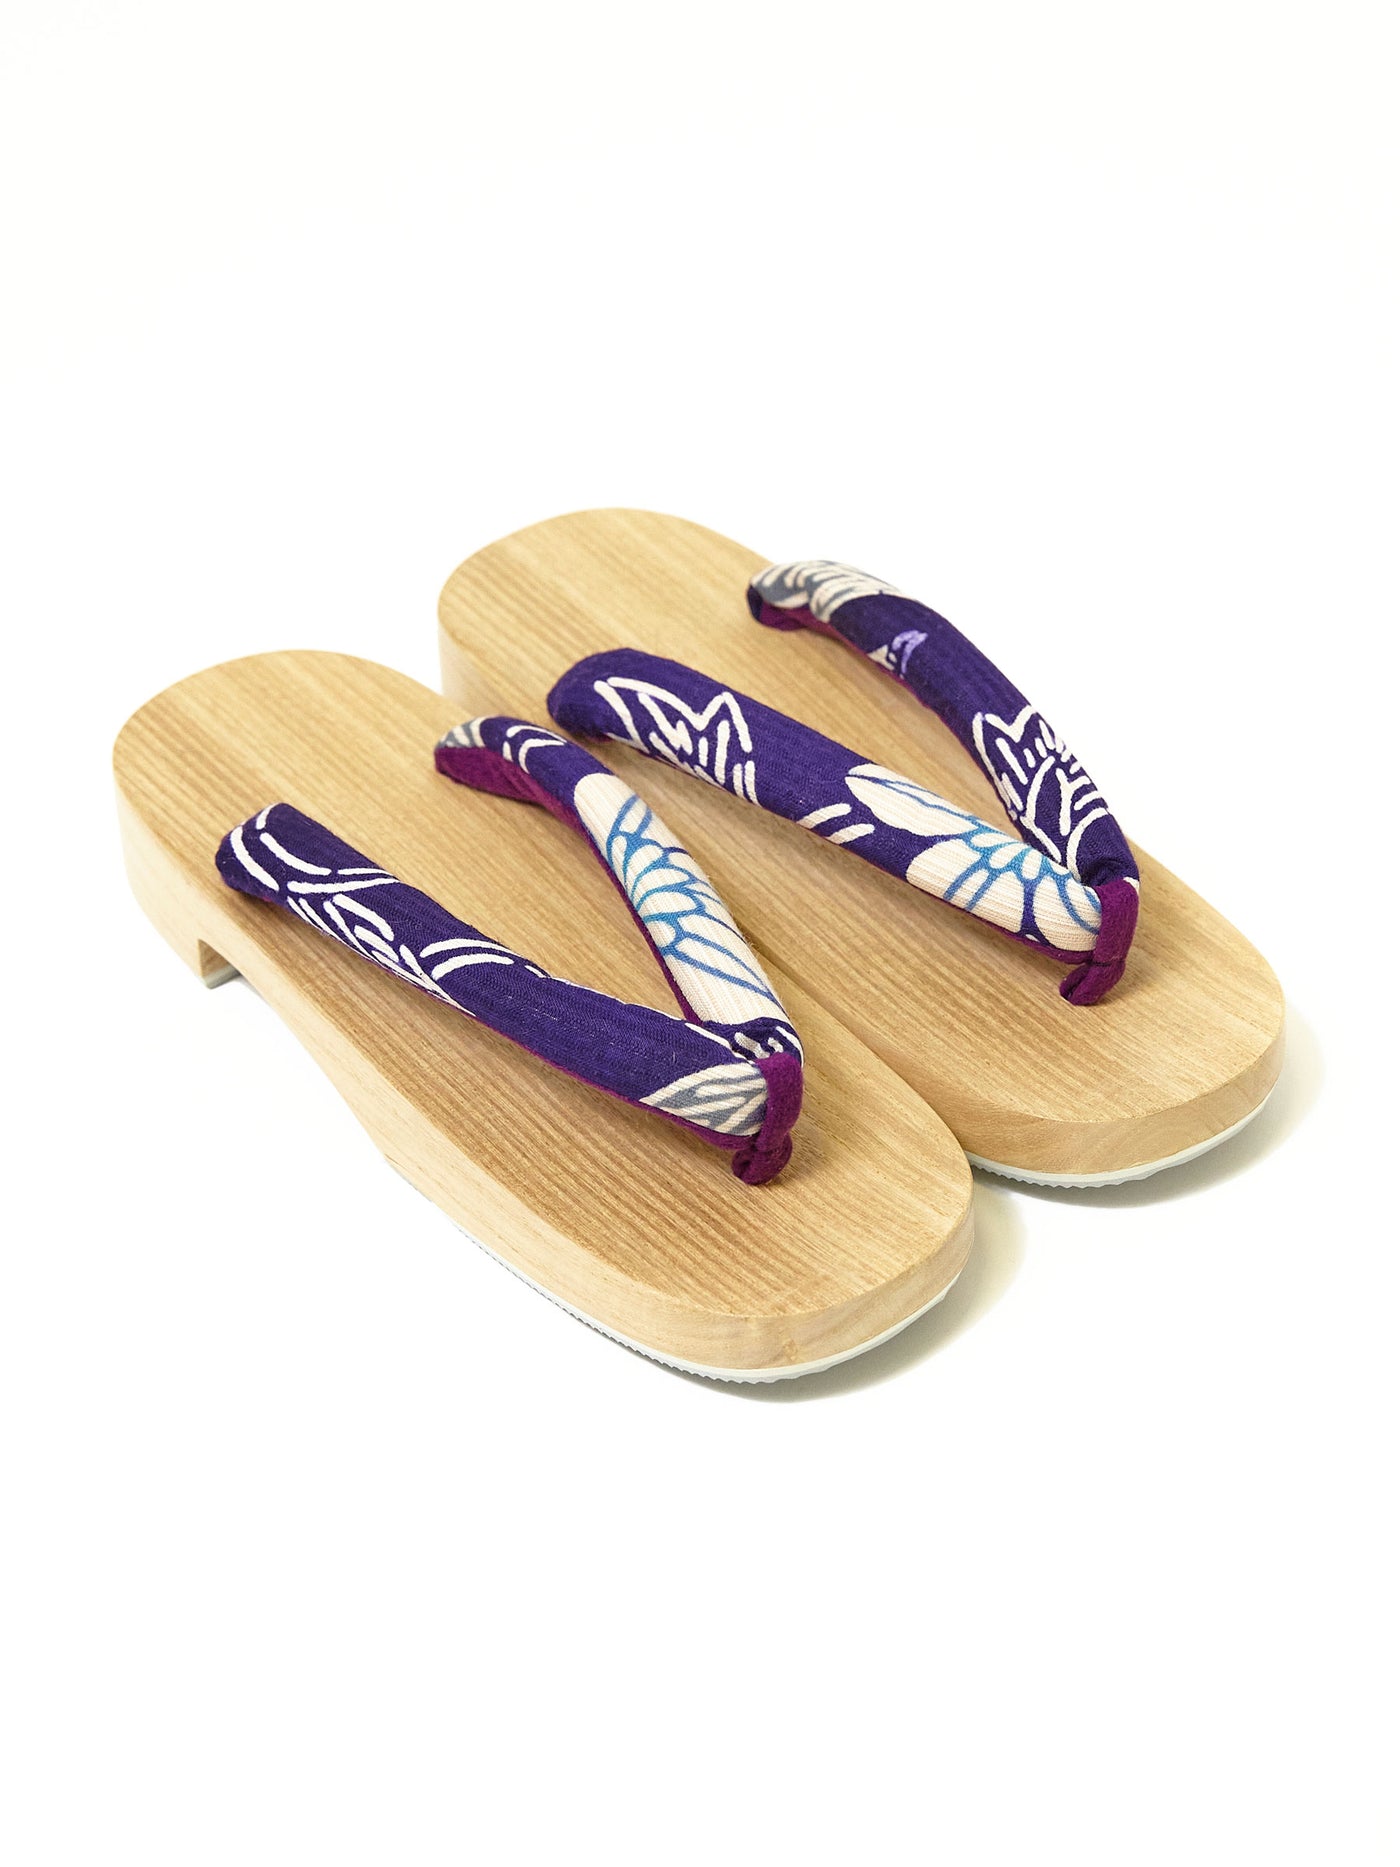 Hana Wooden Geta Sandals